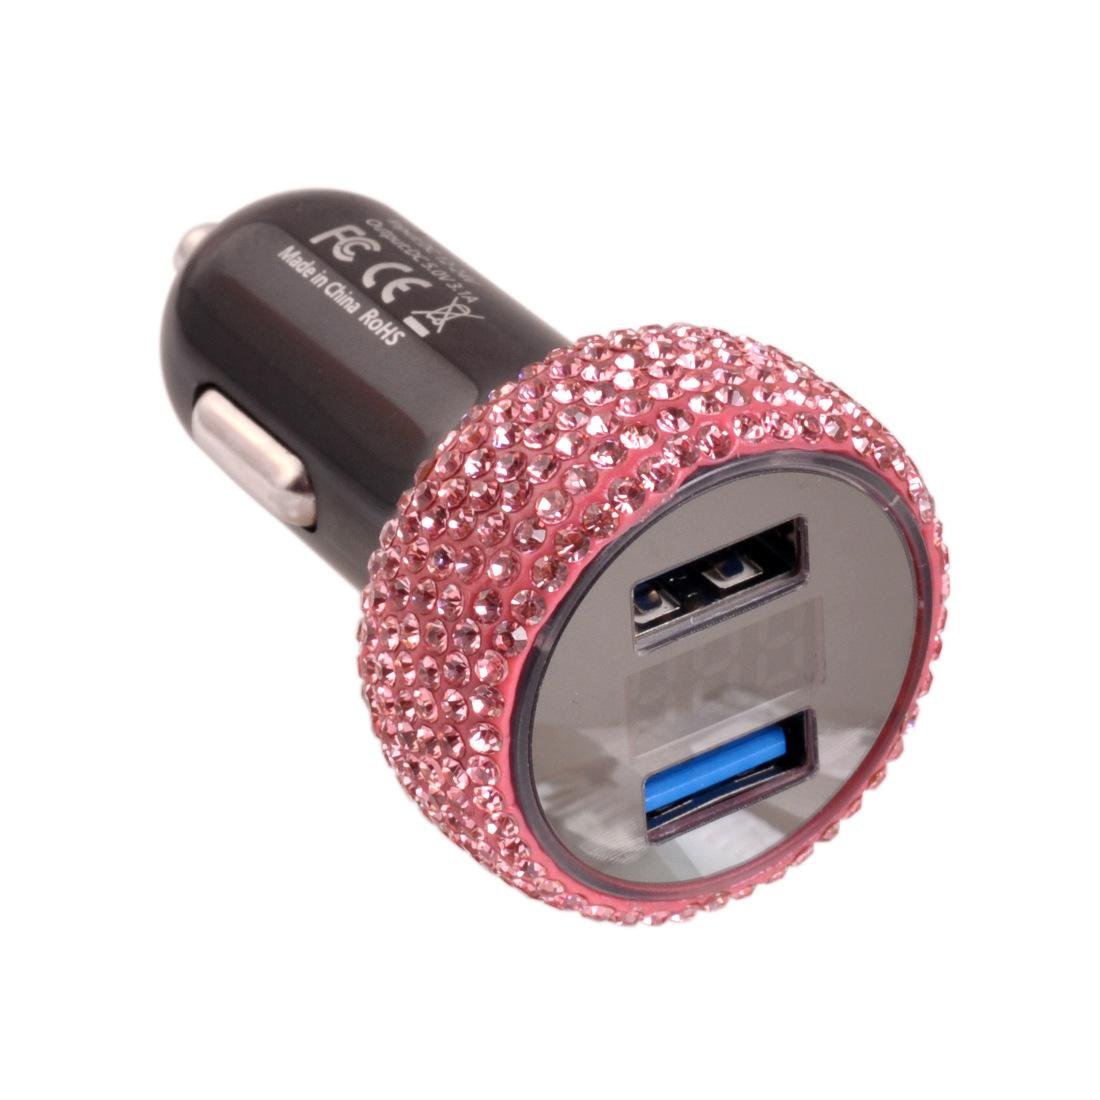 Dual USB car charger